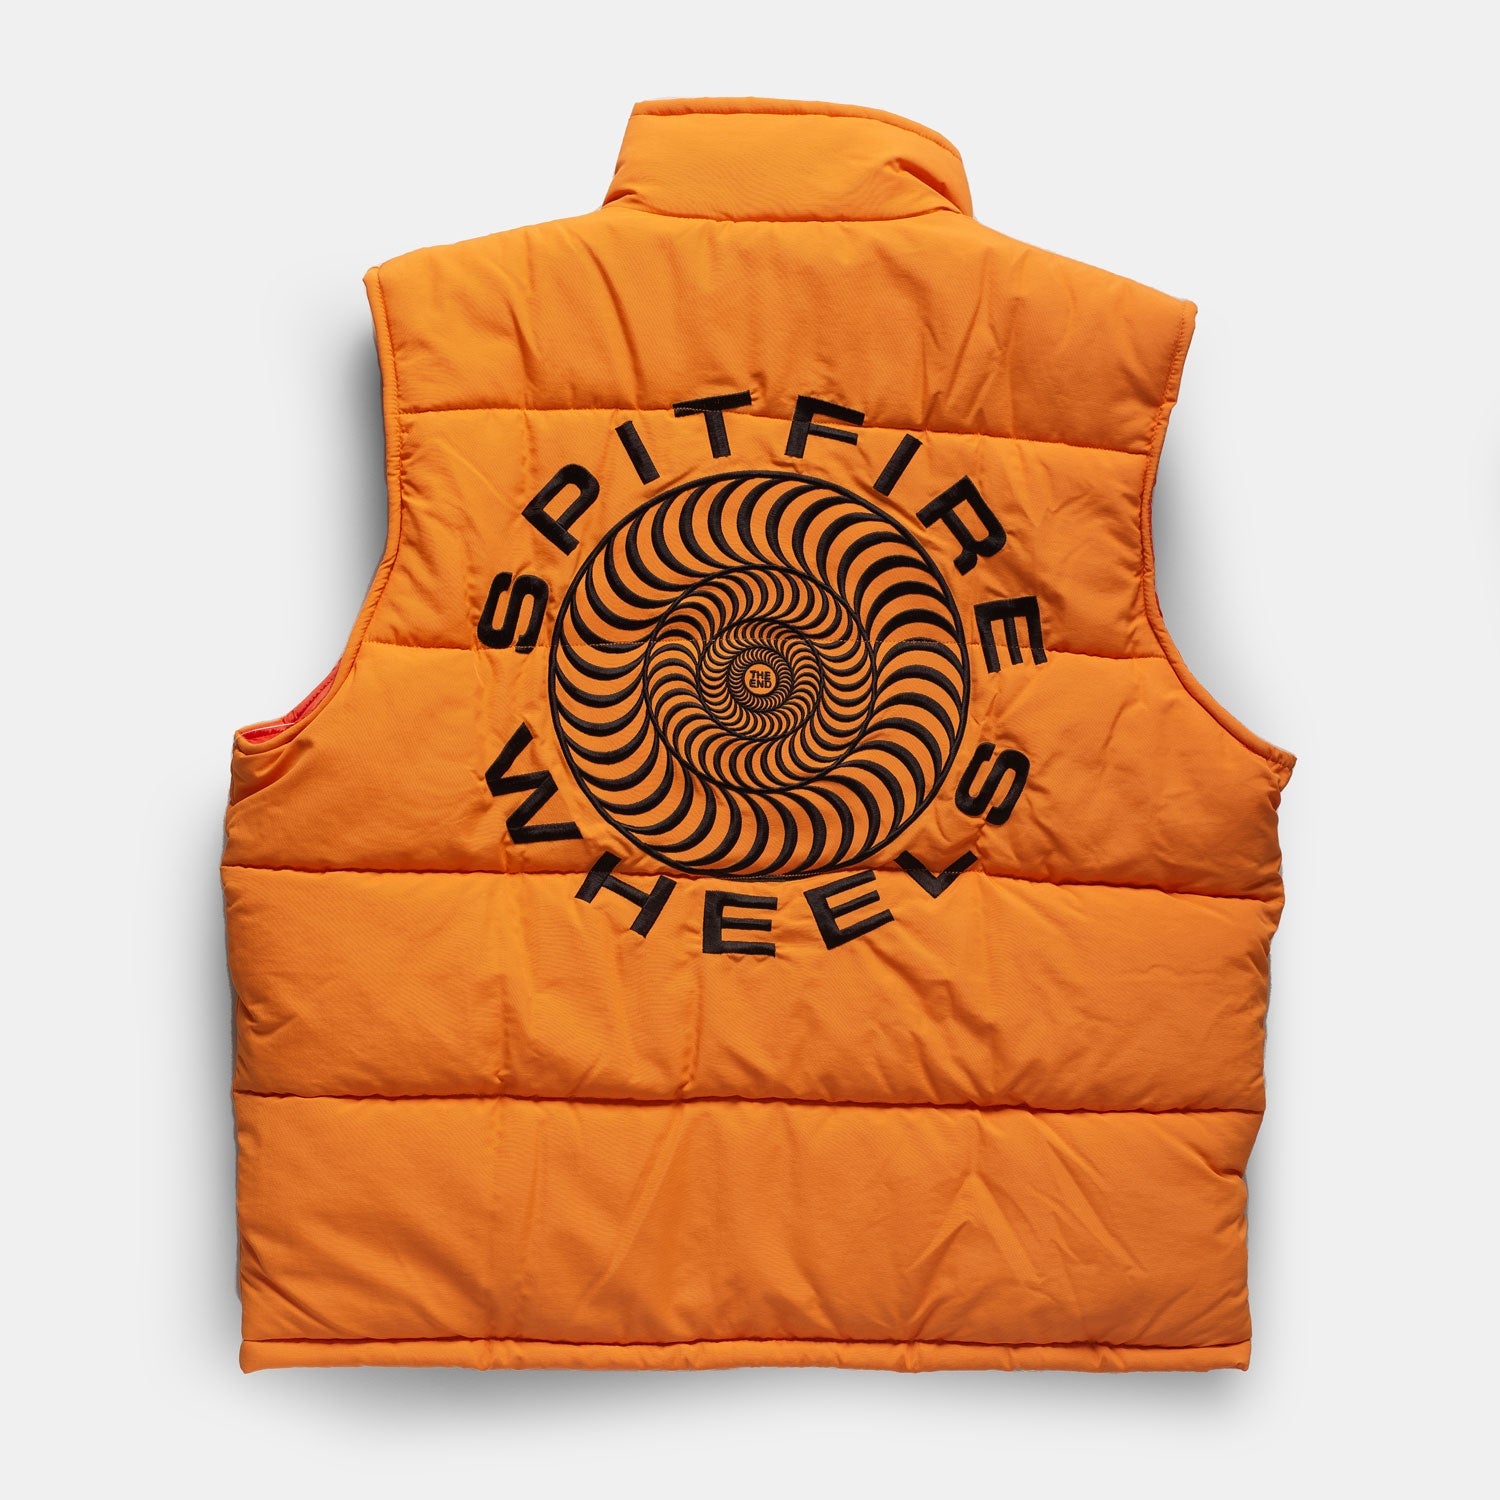 Spitfire - Classic Swirl Vest '87 - Orange / Black - Parliamentskateshop